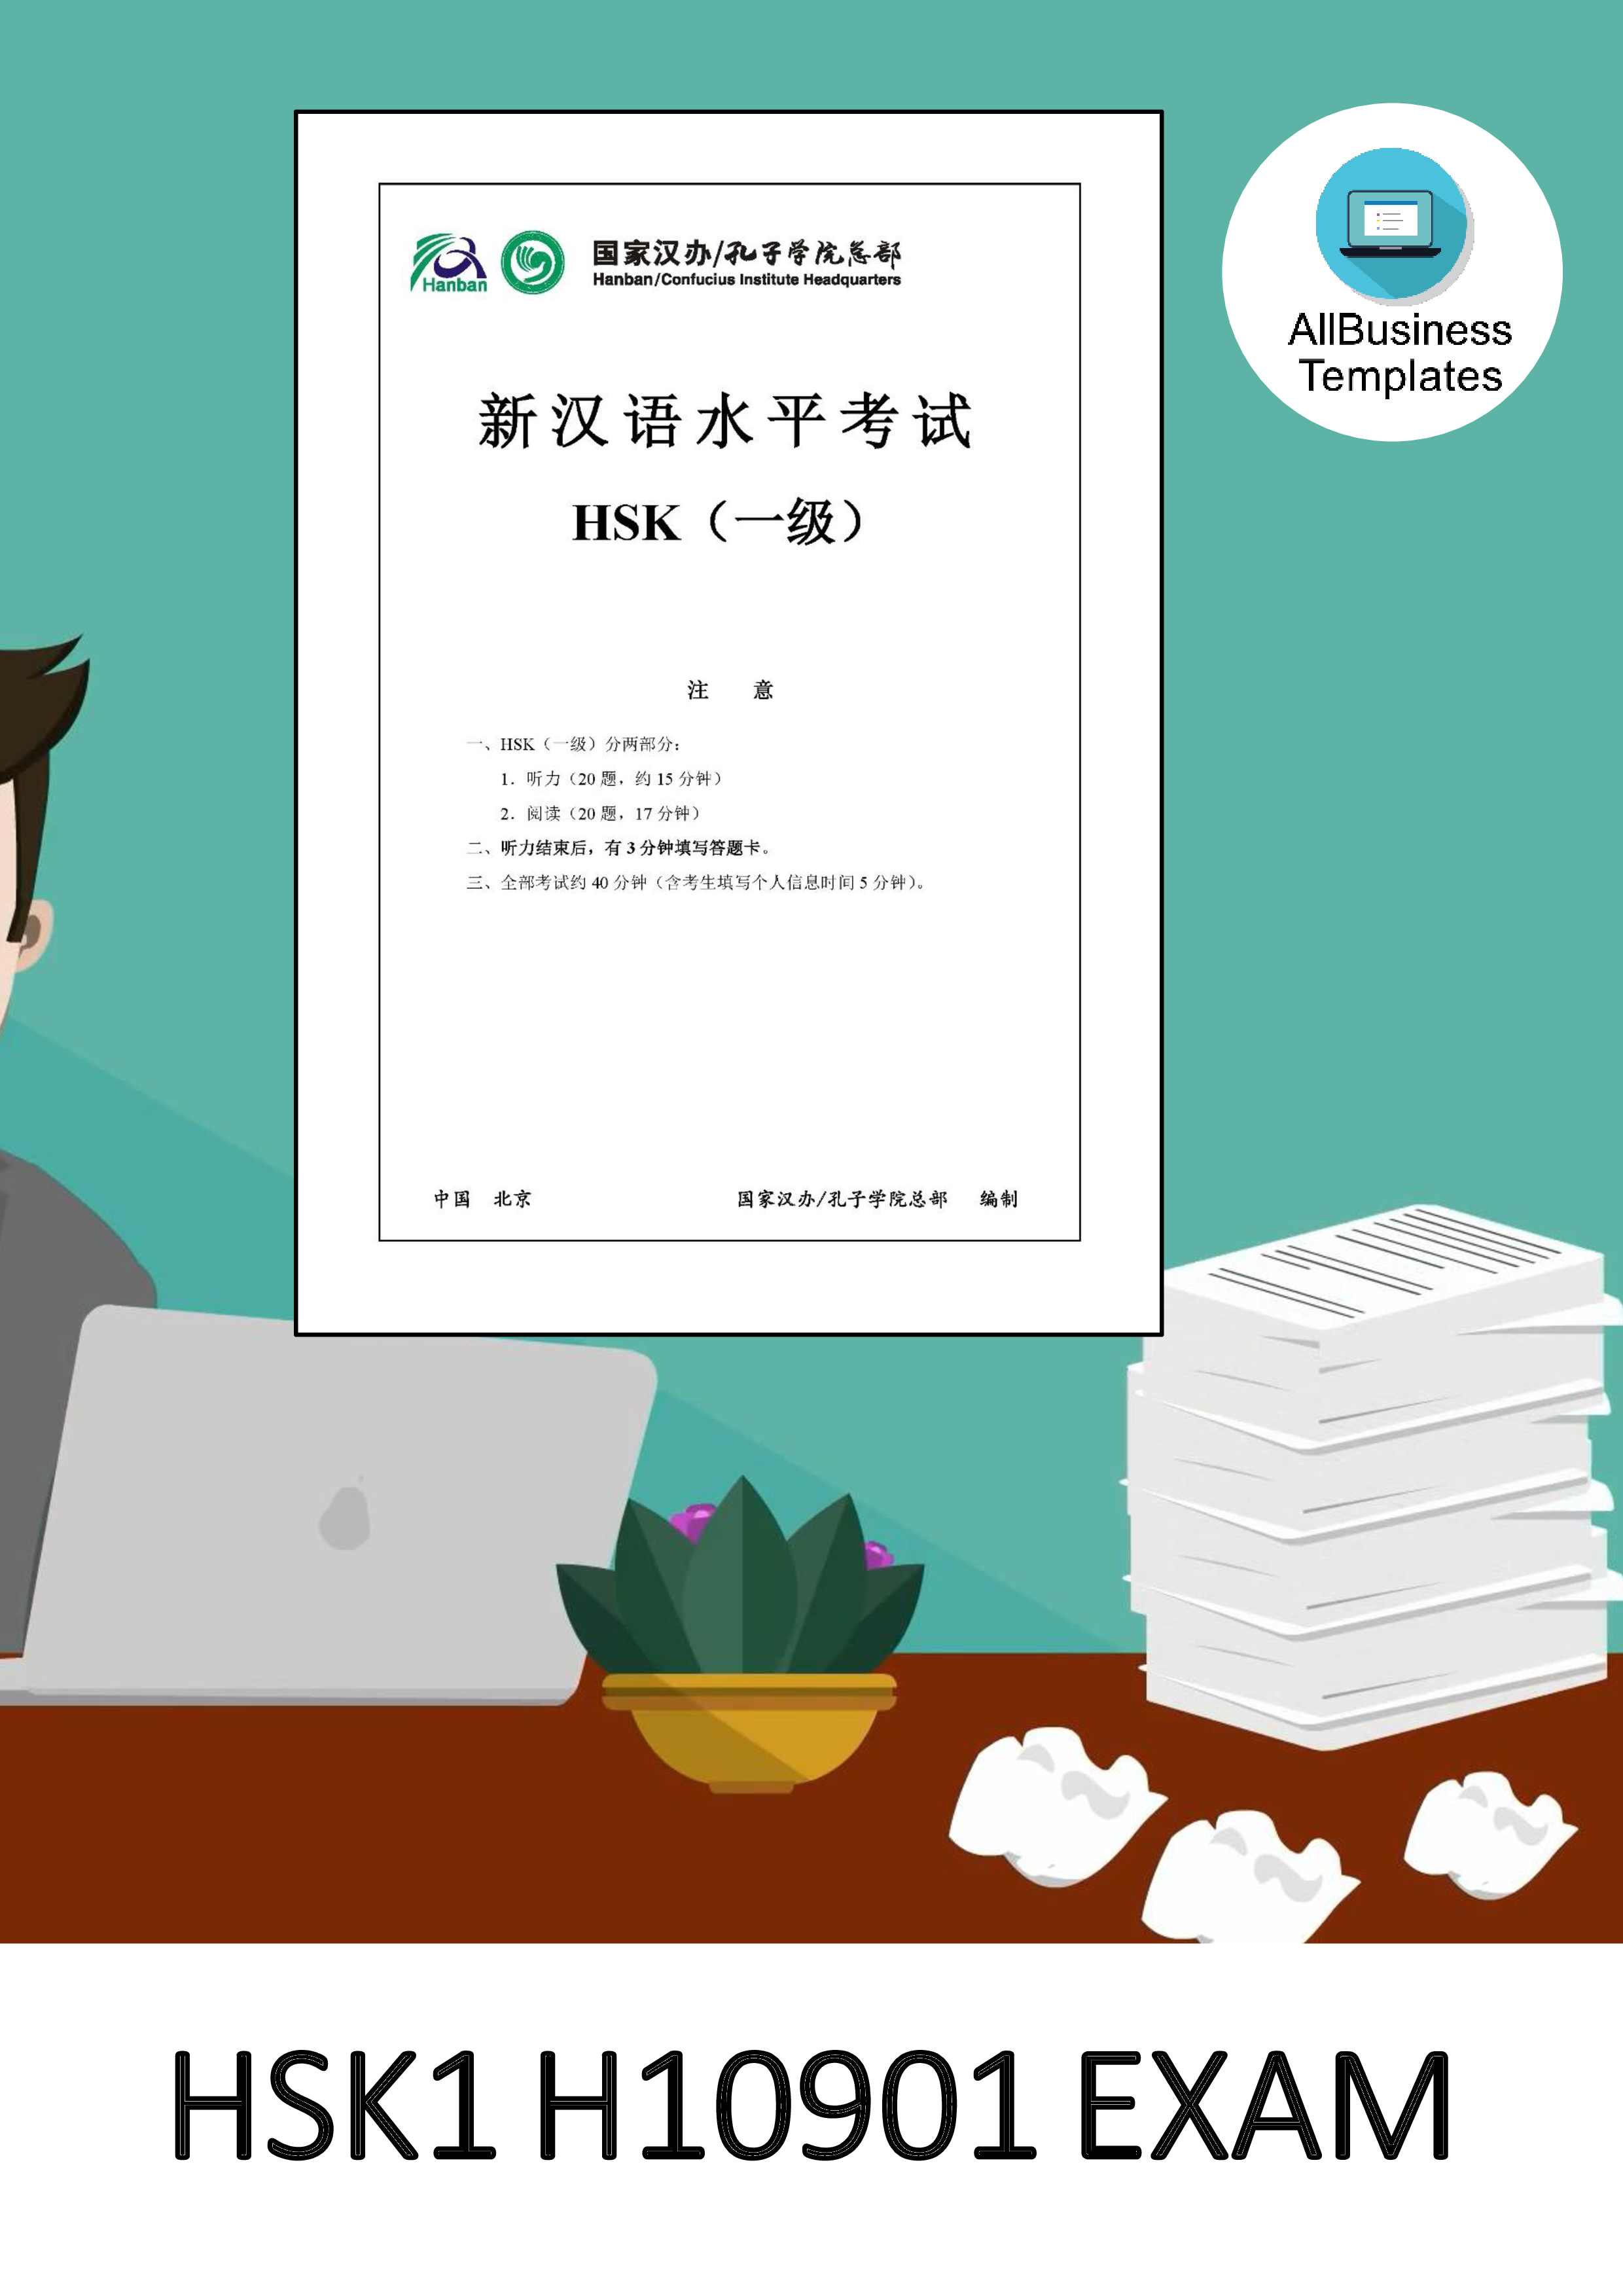 hsk1 chinese exam including answers h10901 exam plantilla imagen principal